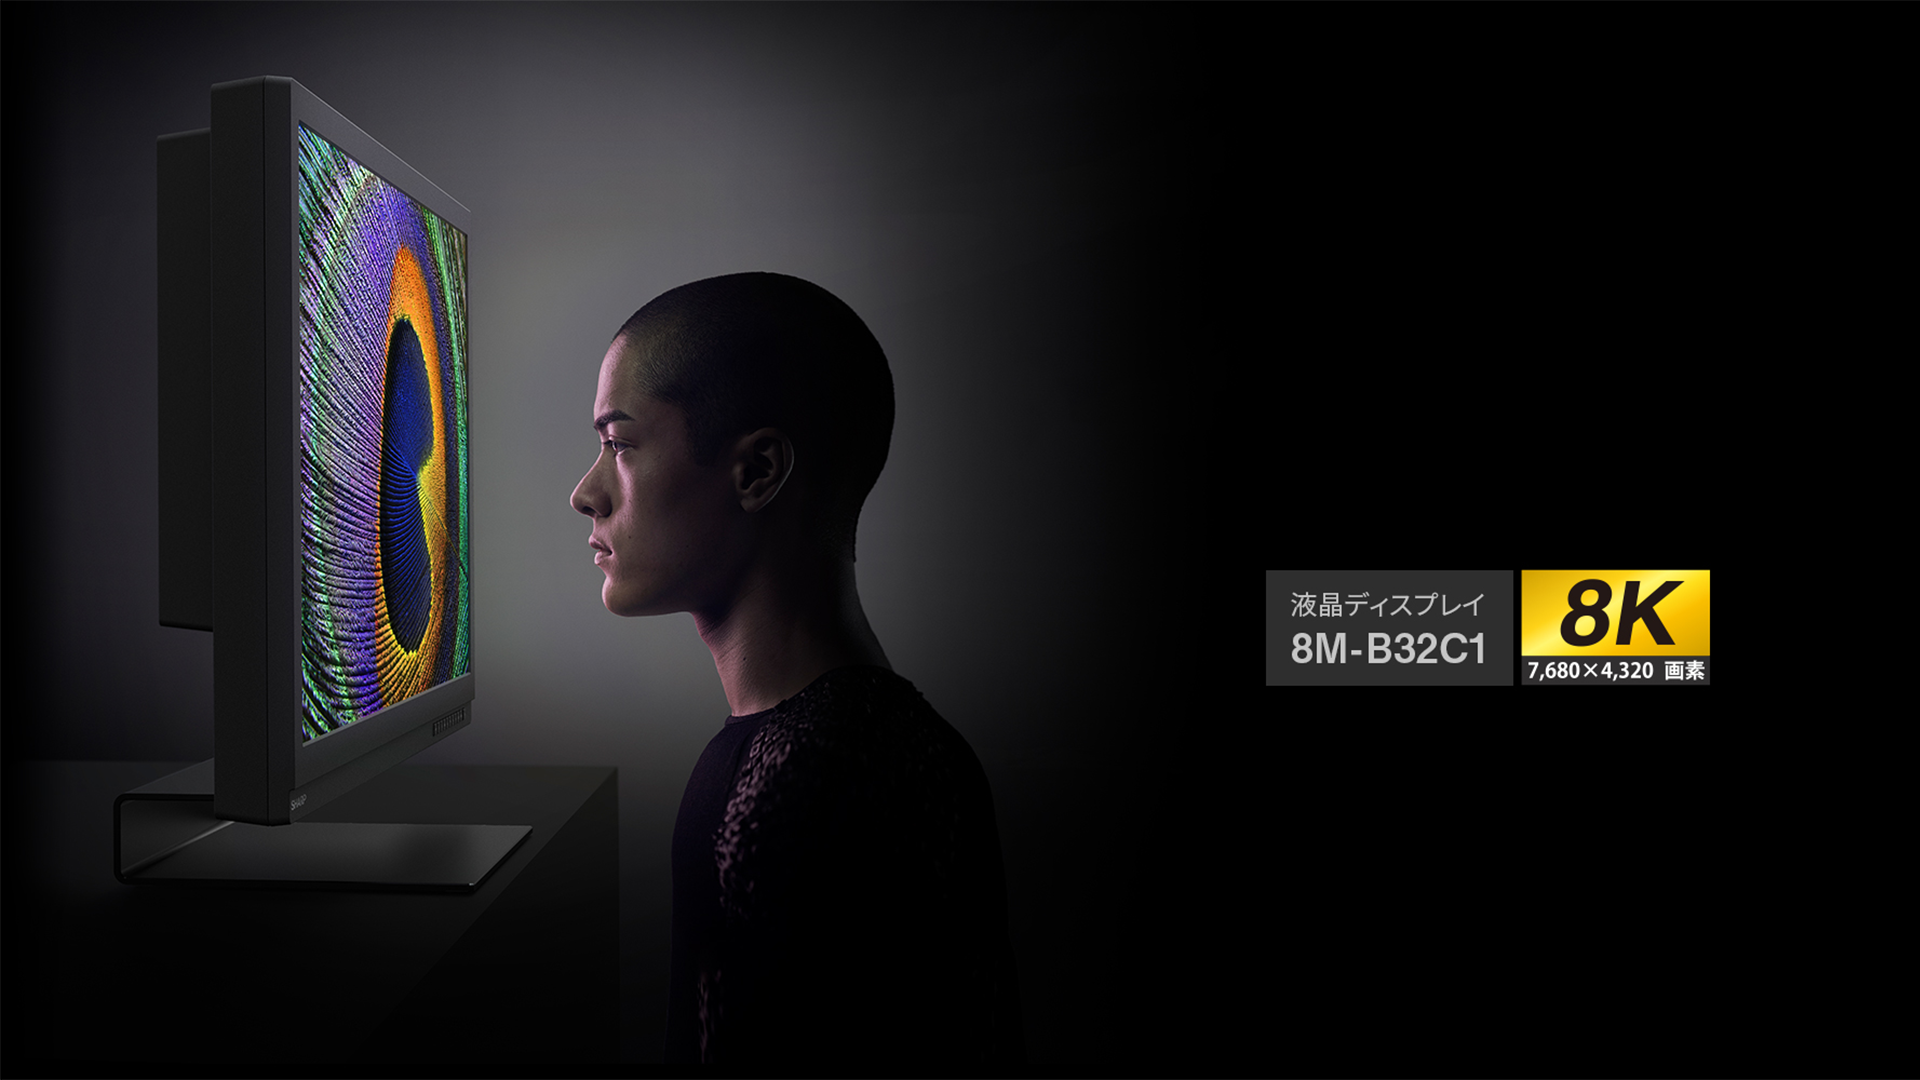 sharp-unveils-professional-8k-display-with-1,000-nits-luminance